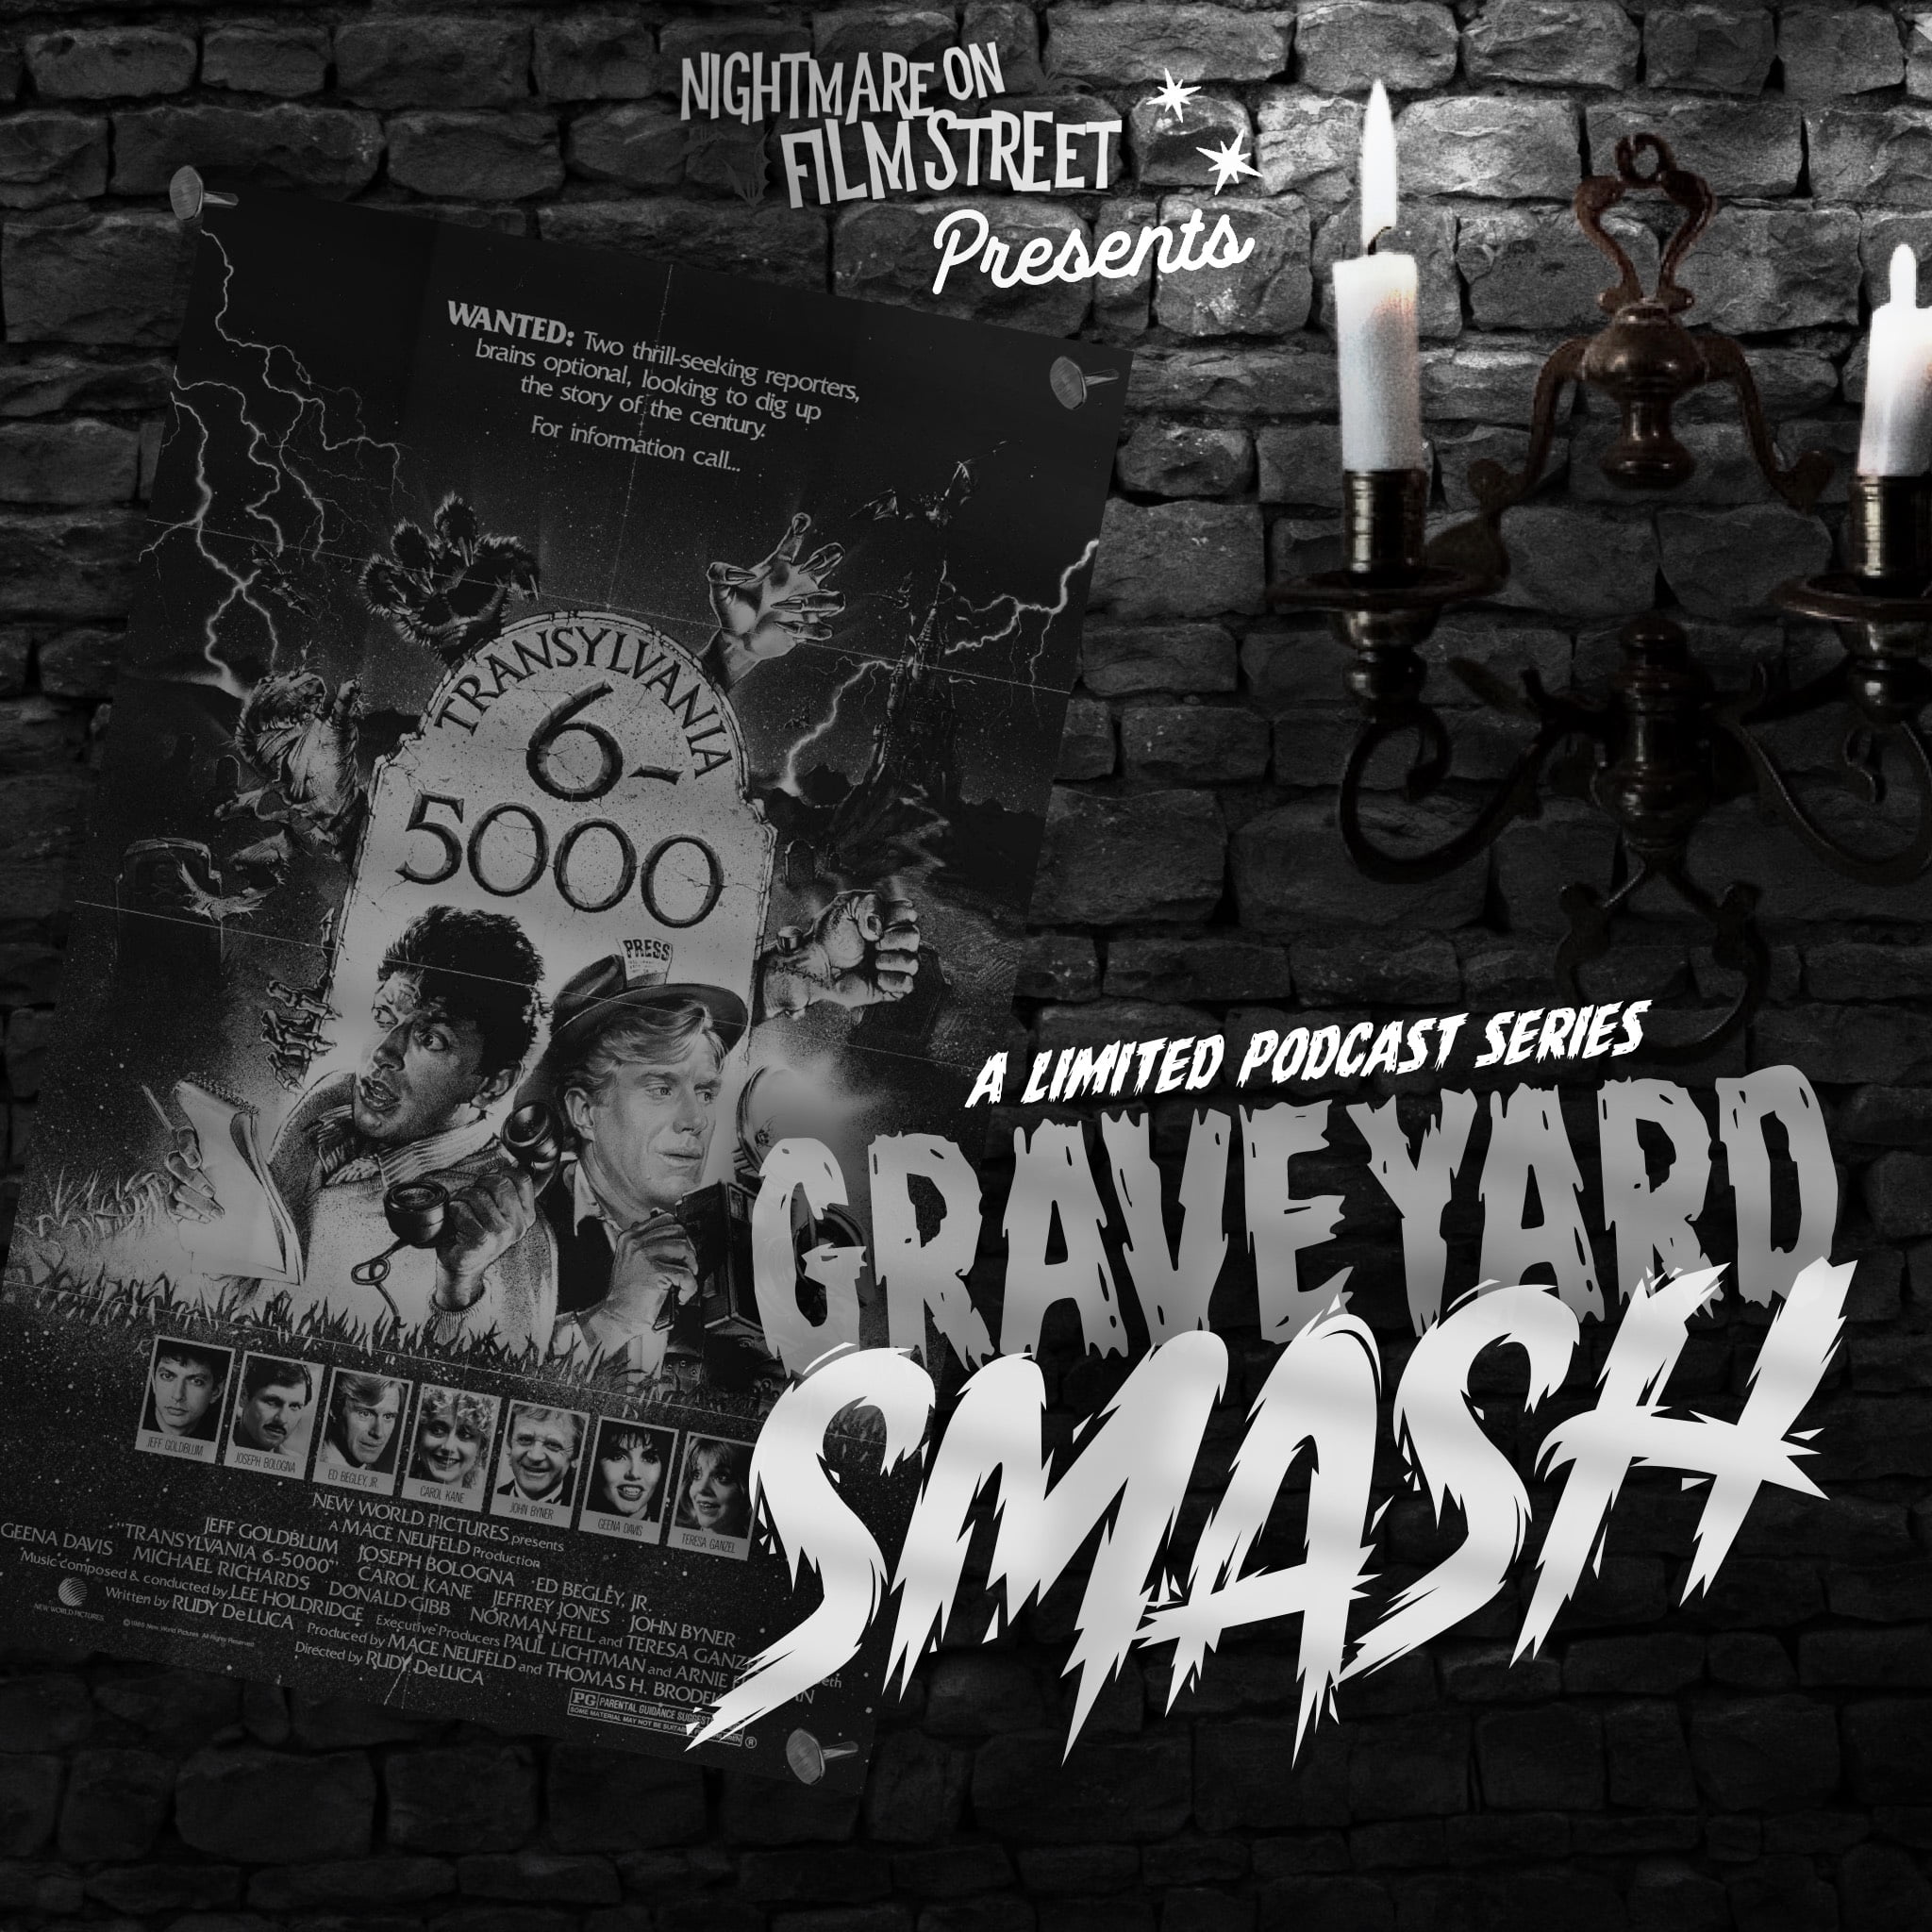 Transylvania 6-5000 - Graveyard Smash Nightmare On Film Street Podcast